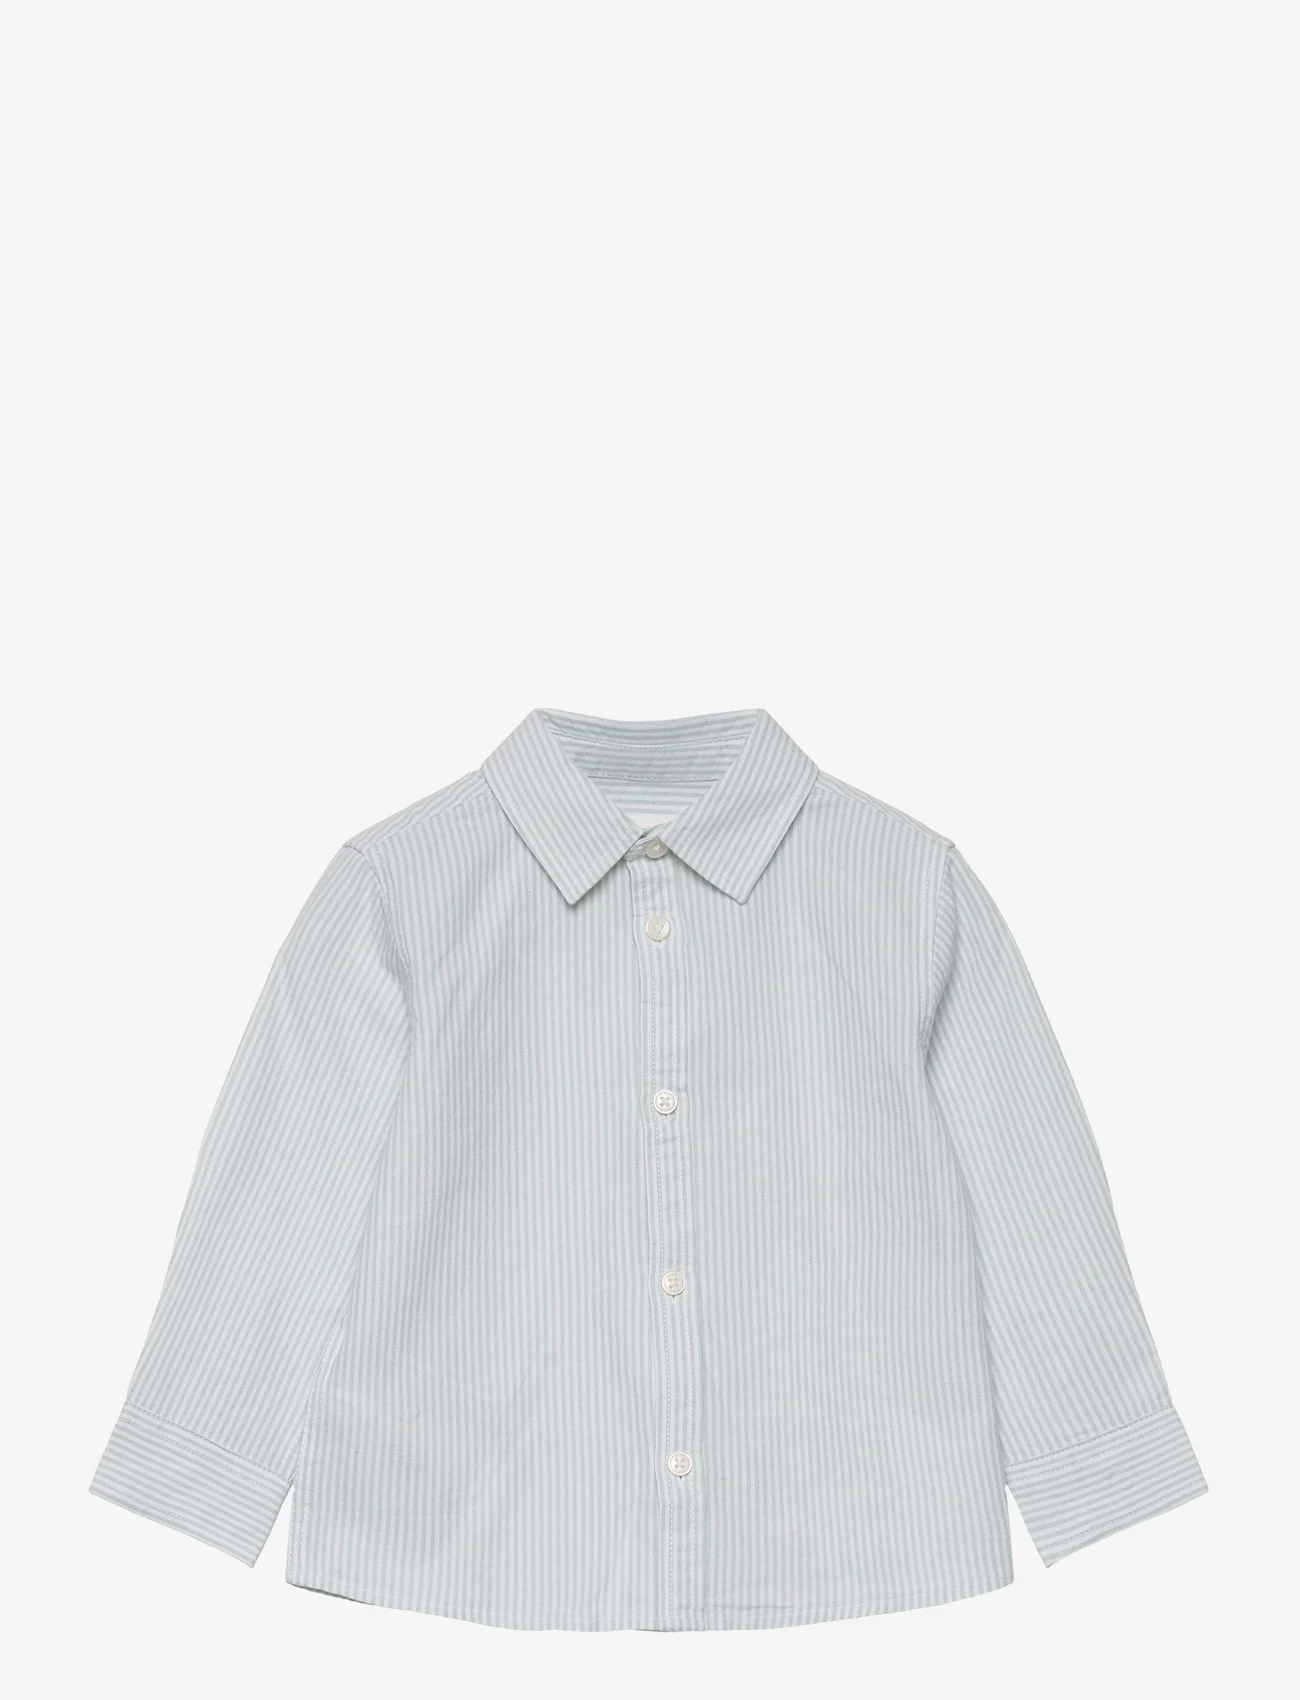 Mango - Oxford cotton shirt - langærmede skjorter - green - 0